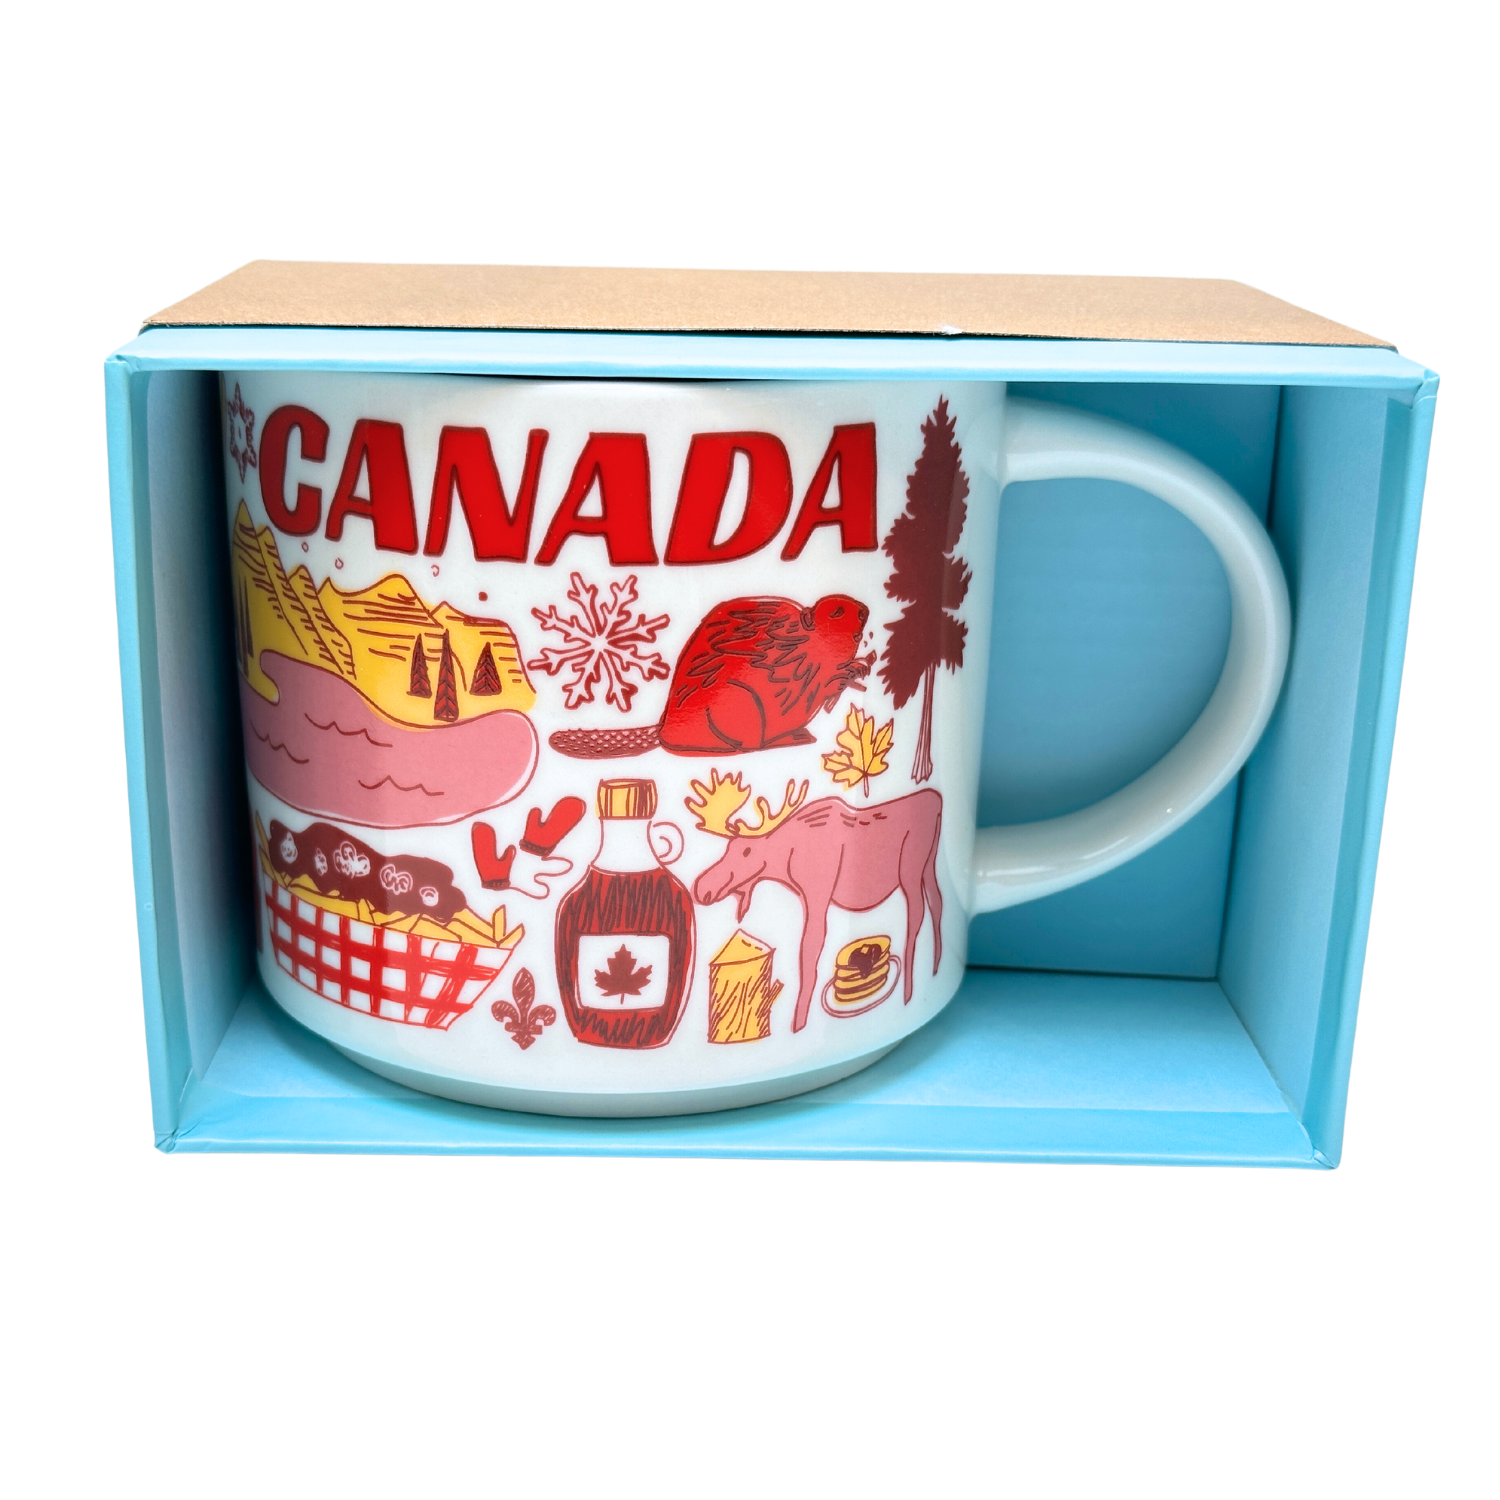 Starbucks Been There Series Canada Ceramic Mug, 14 Oz